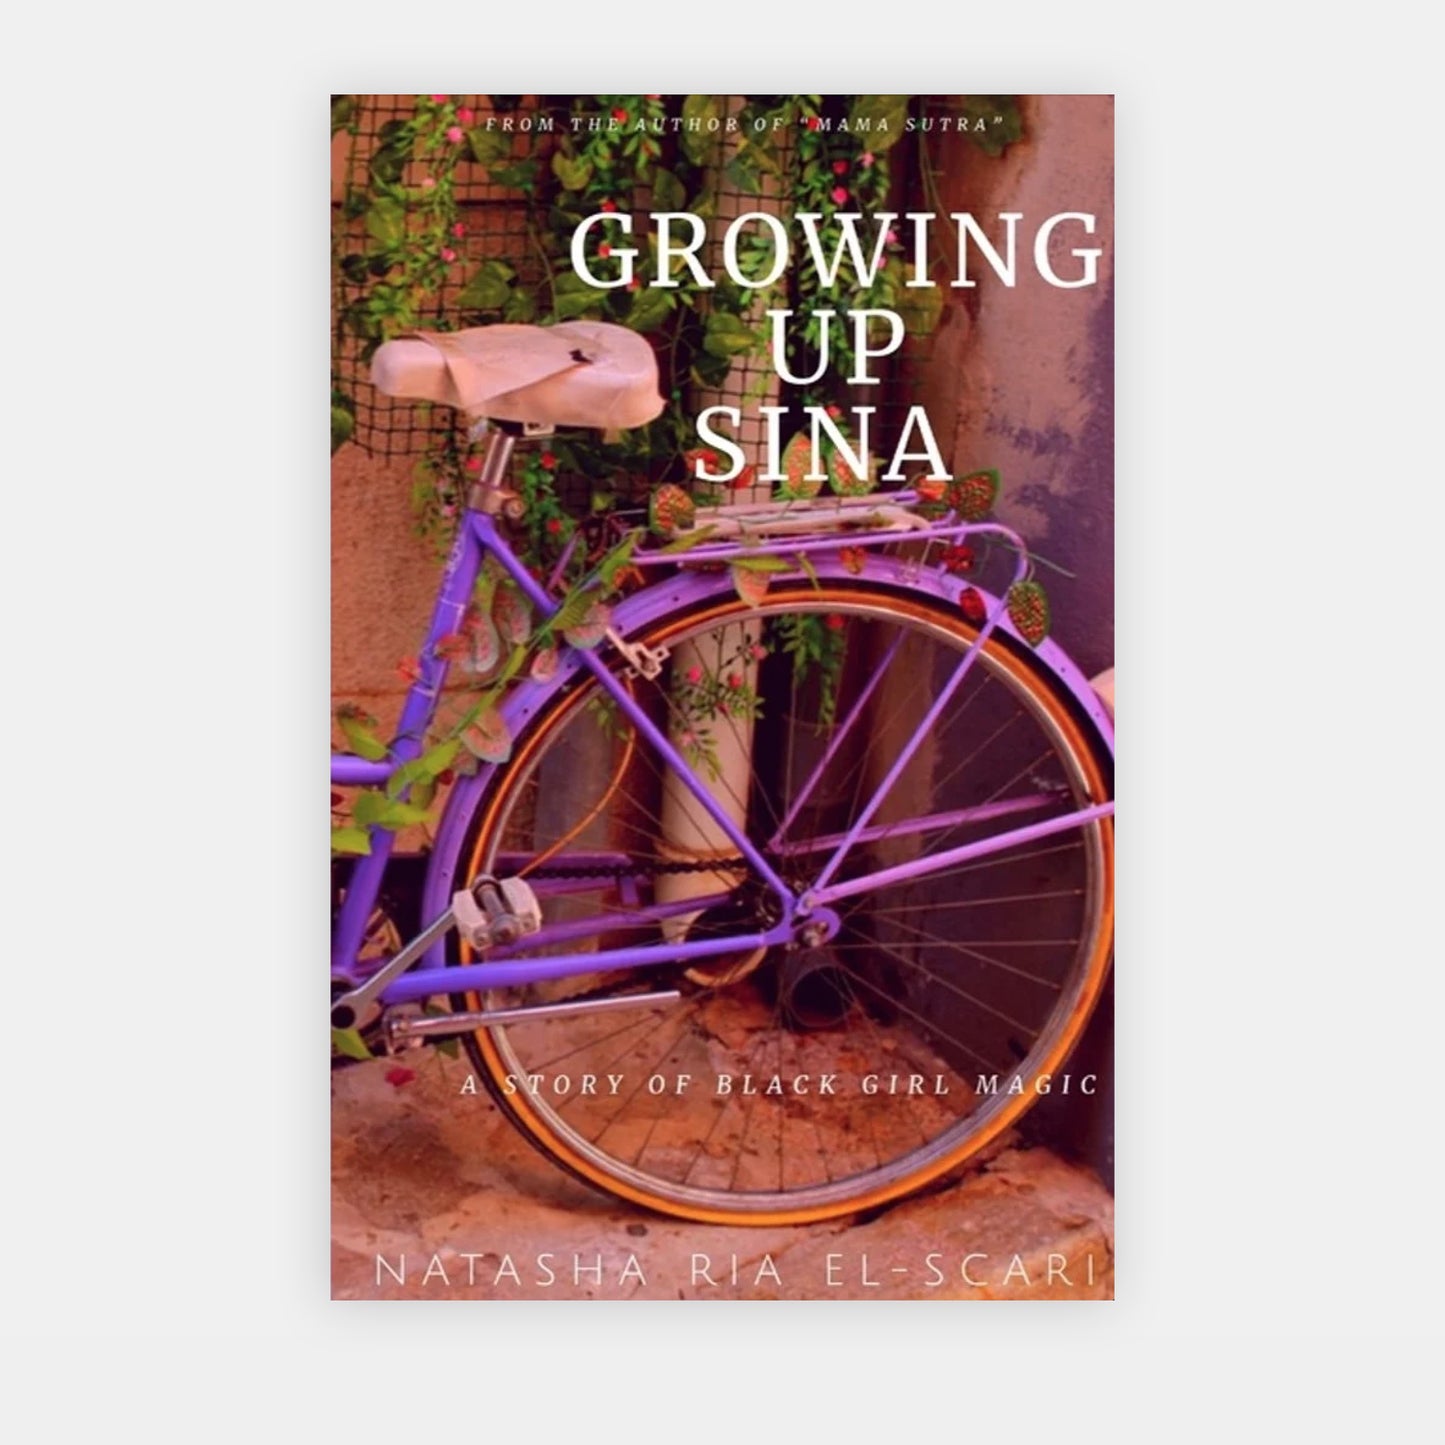 Growing Up Sina by Natasha Ria El-Scari